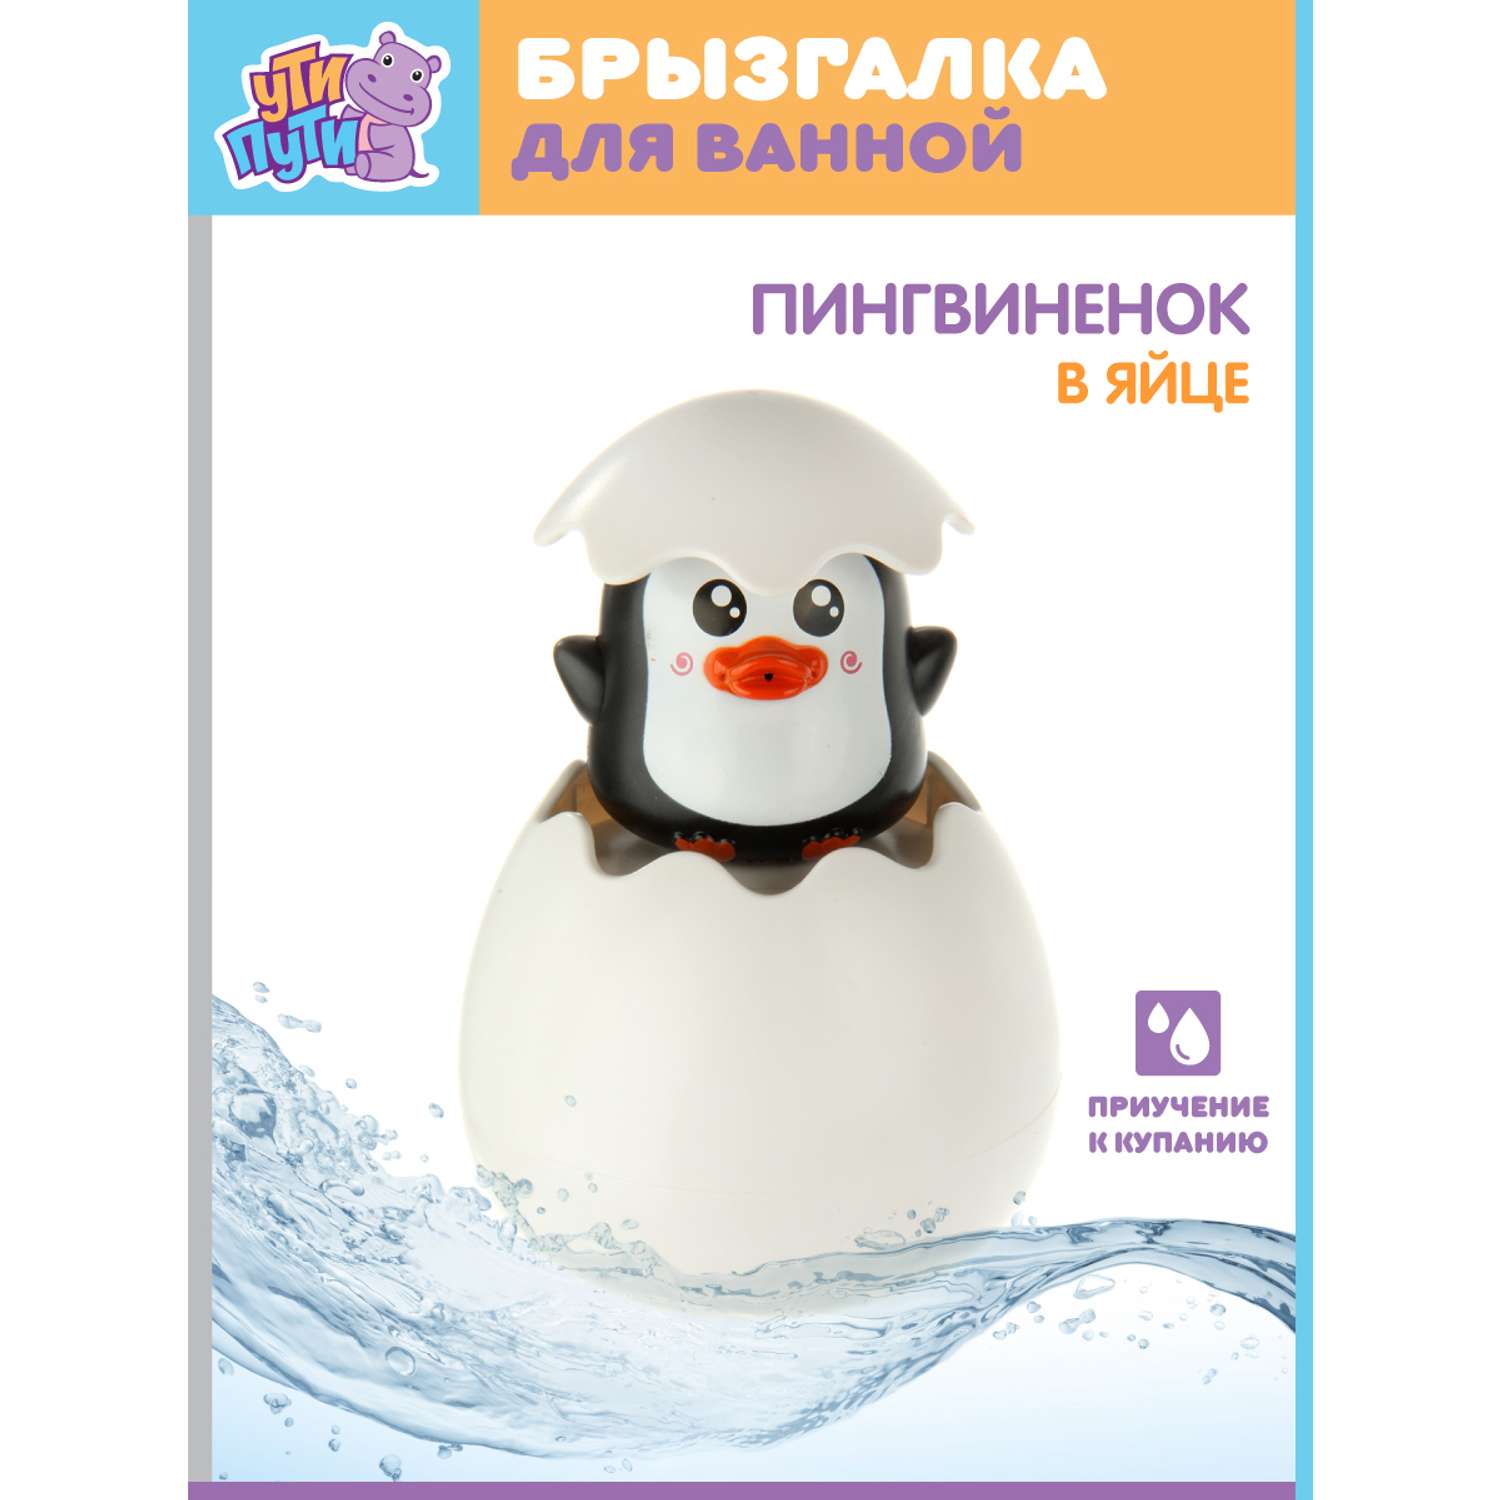 Игрушка для ванны Ути Пути пингвинёнок - фото 2